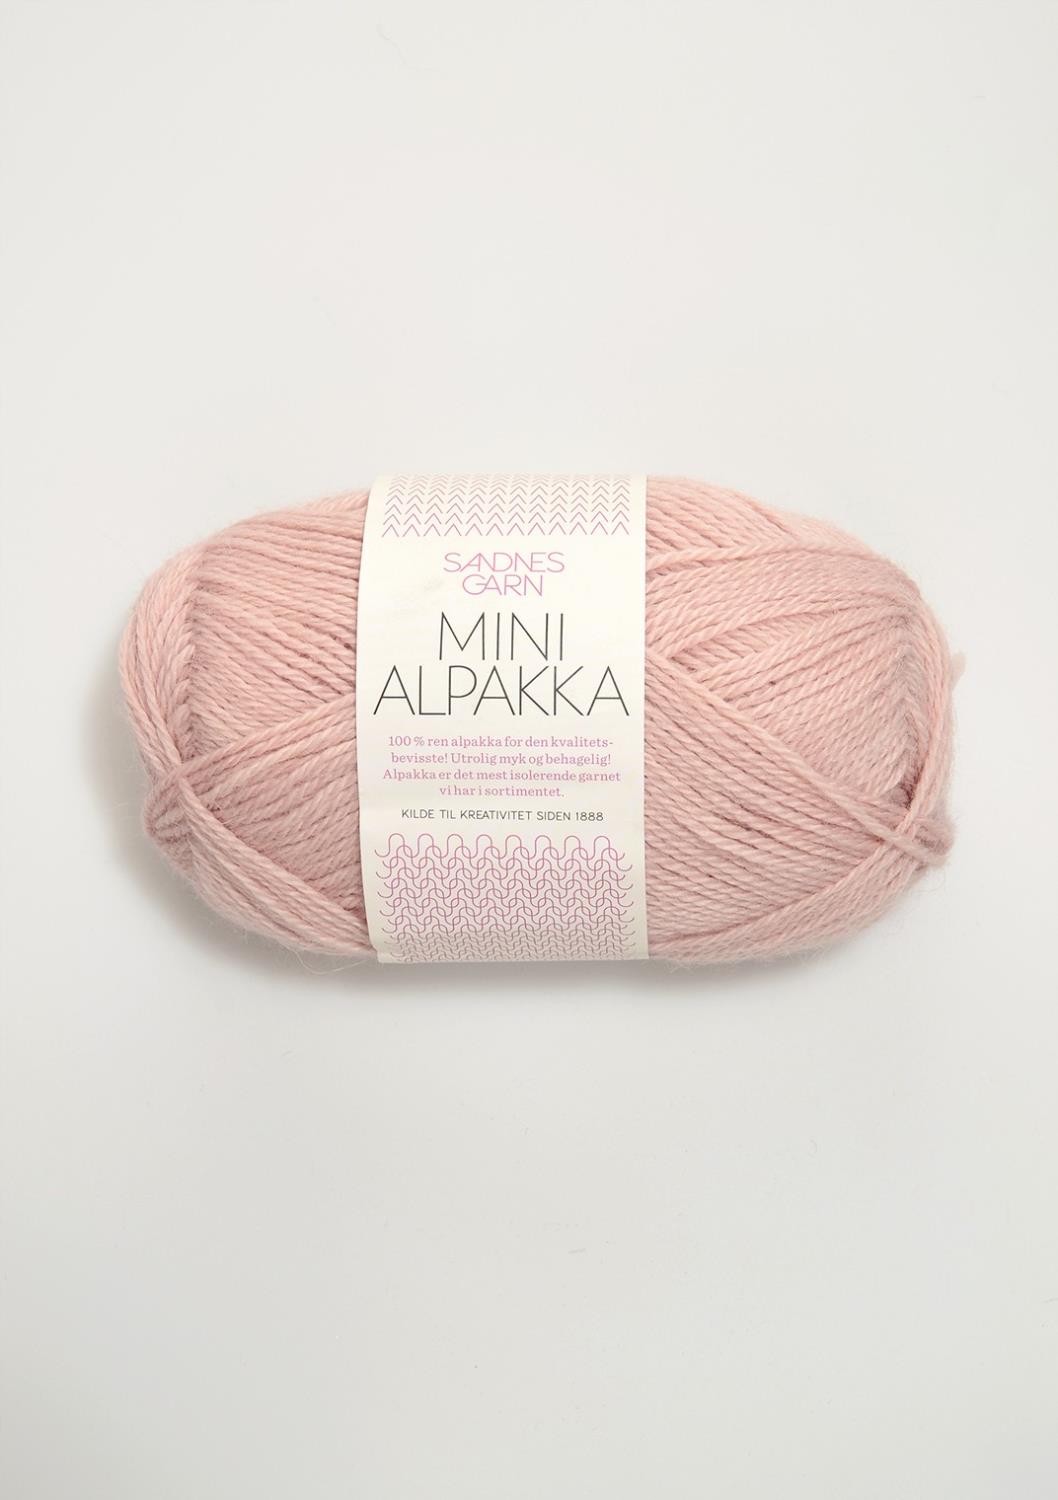 Mini Alpakka Sandnes 3511 - Pudder Rosa